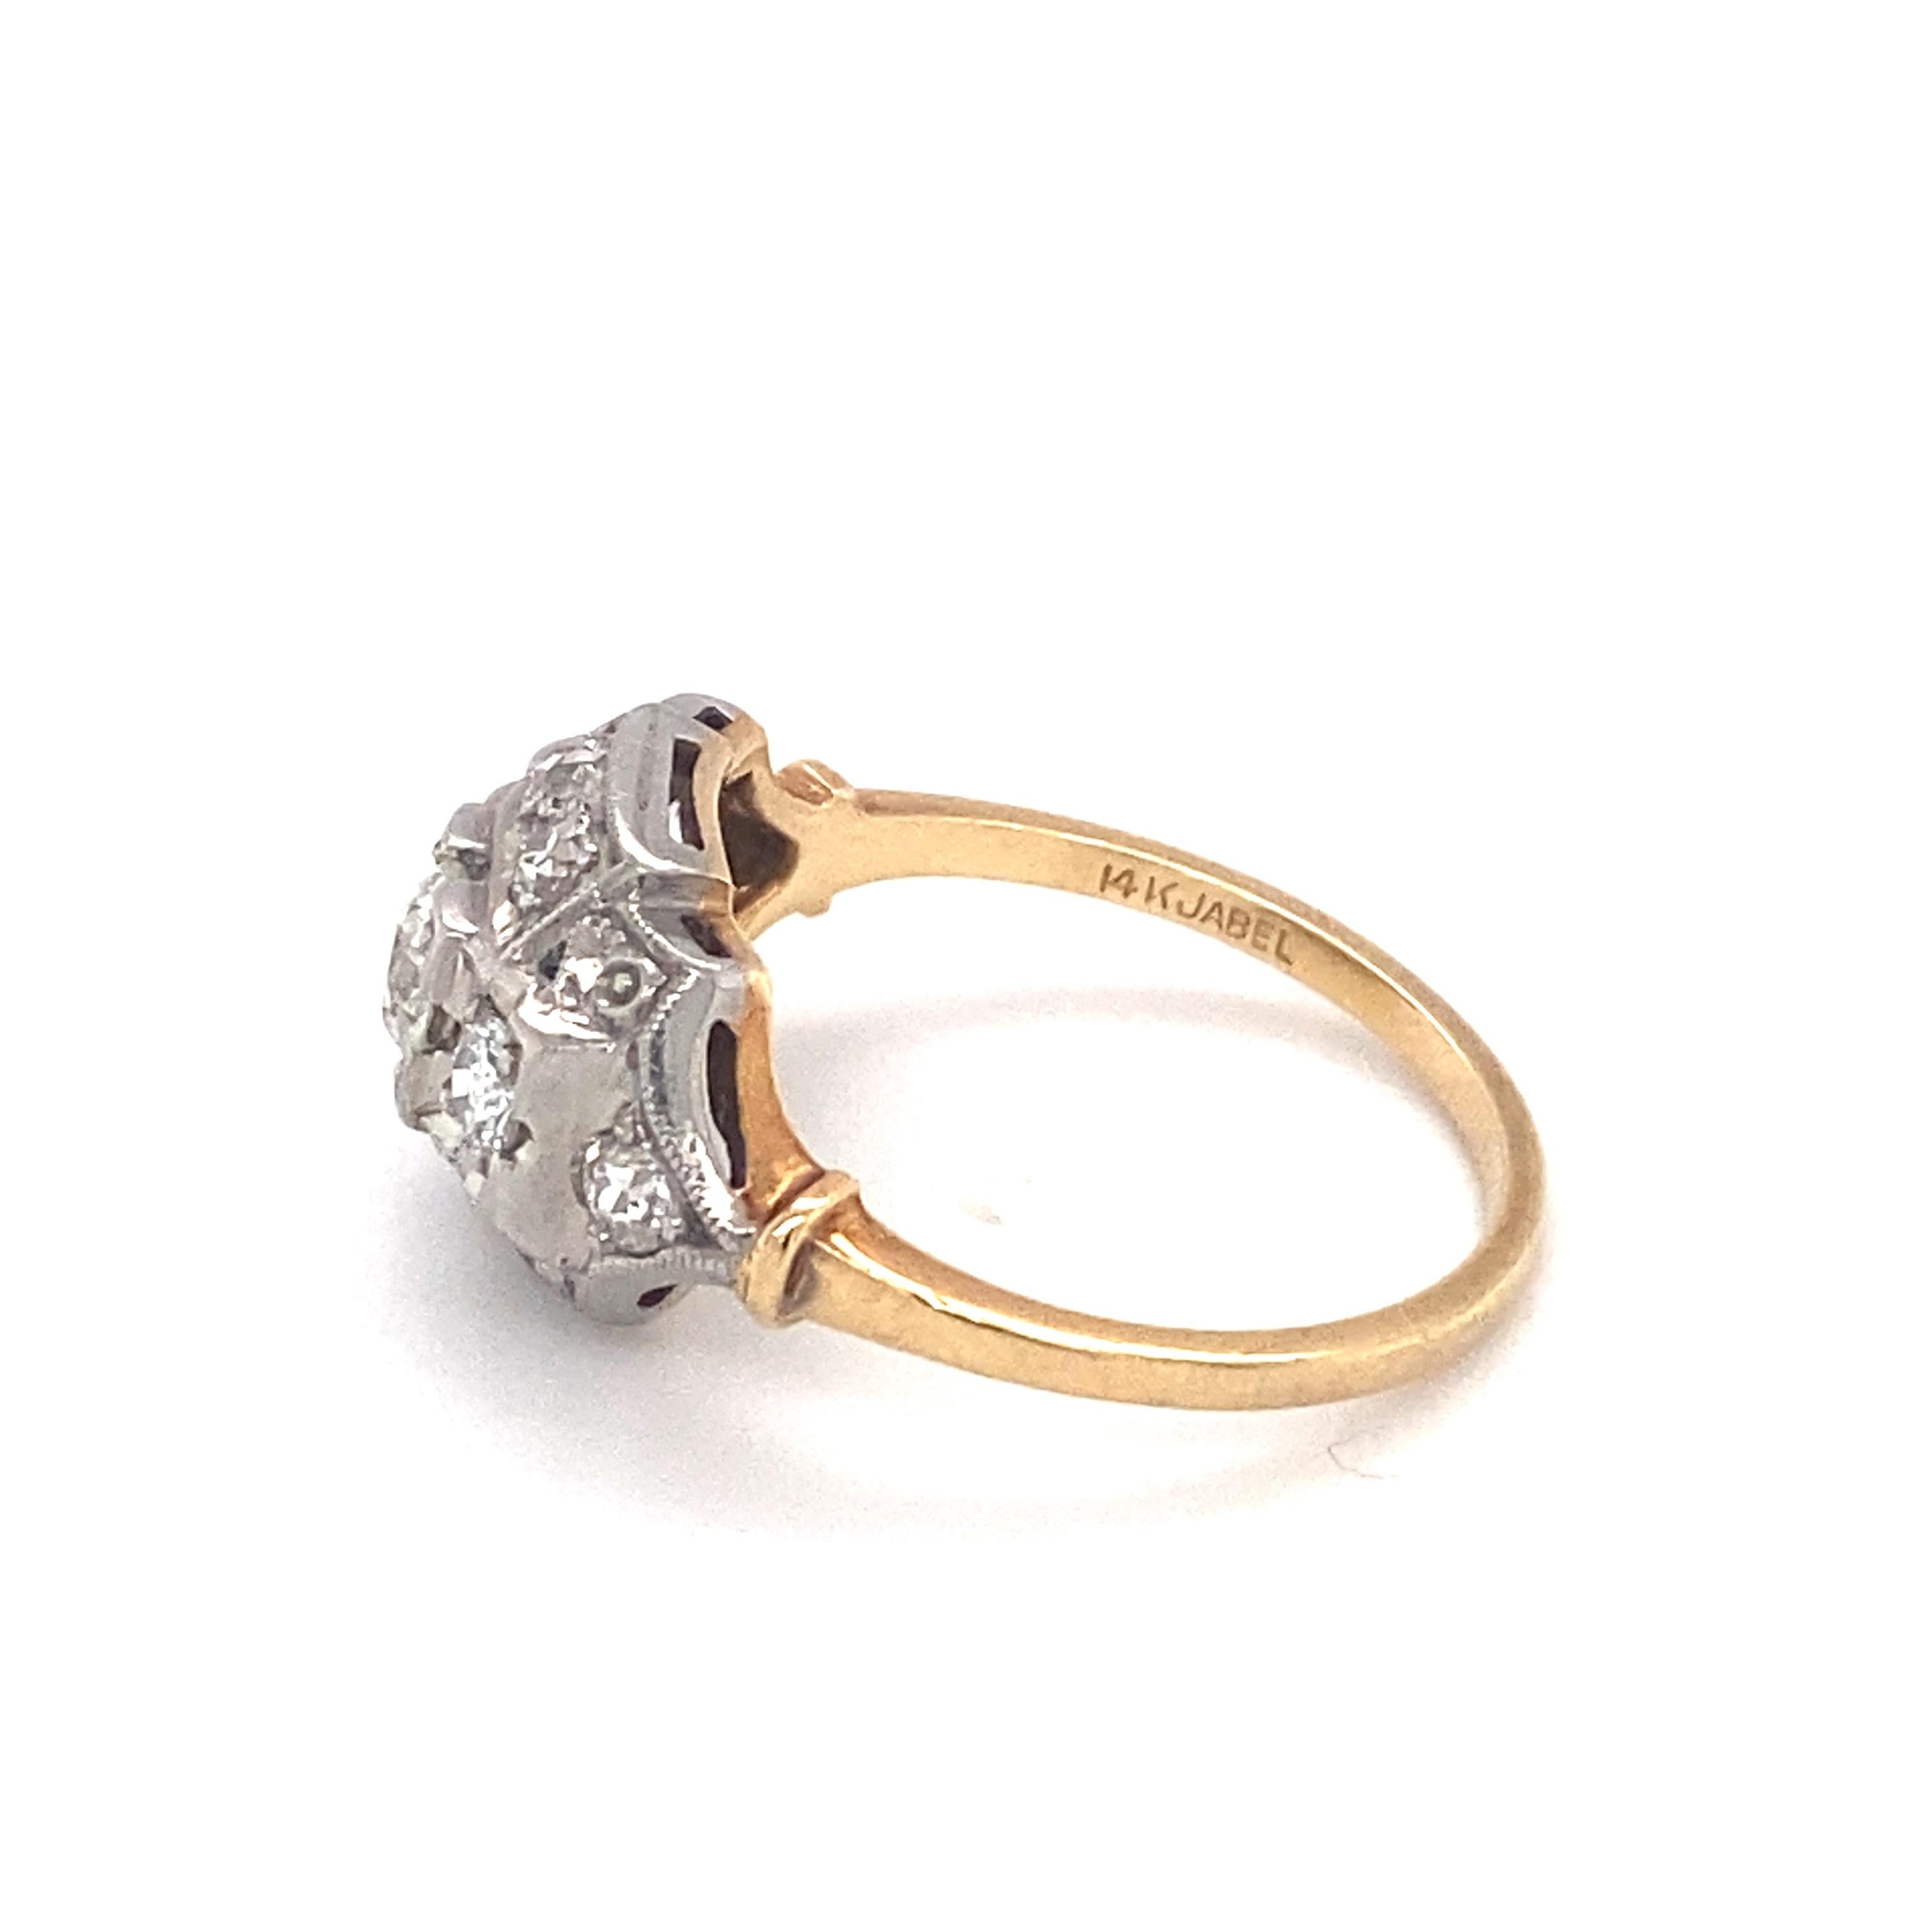 Women's or Men's circa 1920s Art Deco Jabel 1 Carat Diamond Ring in Two Tone 14K Gold